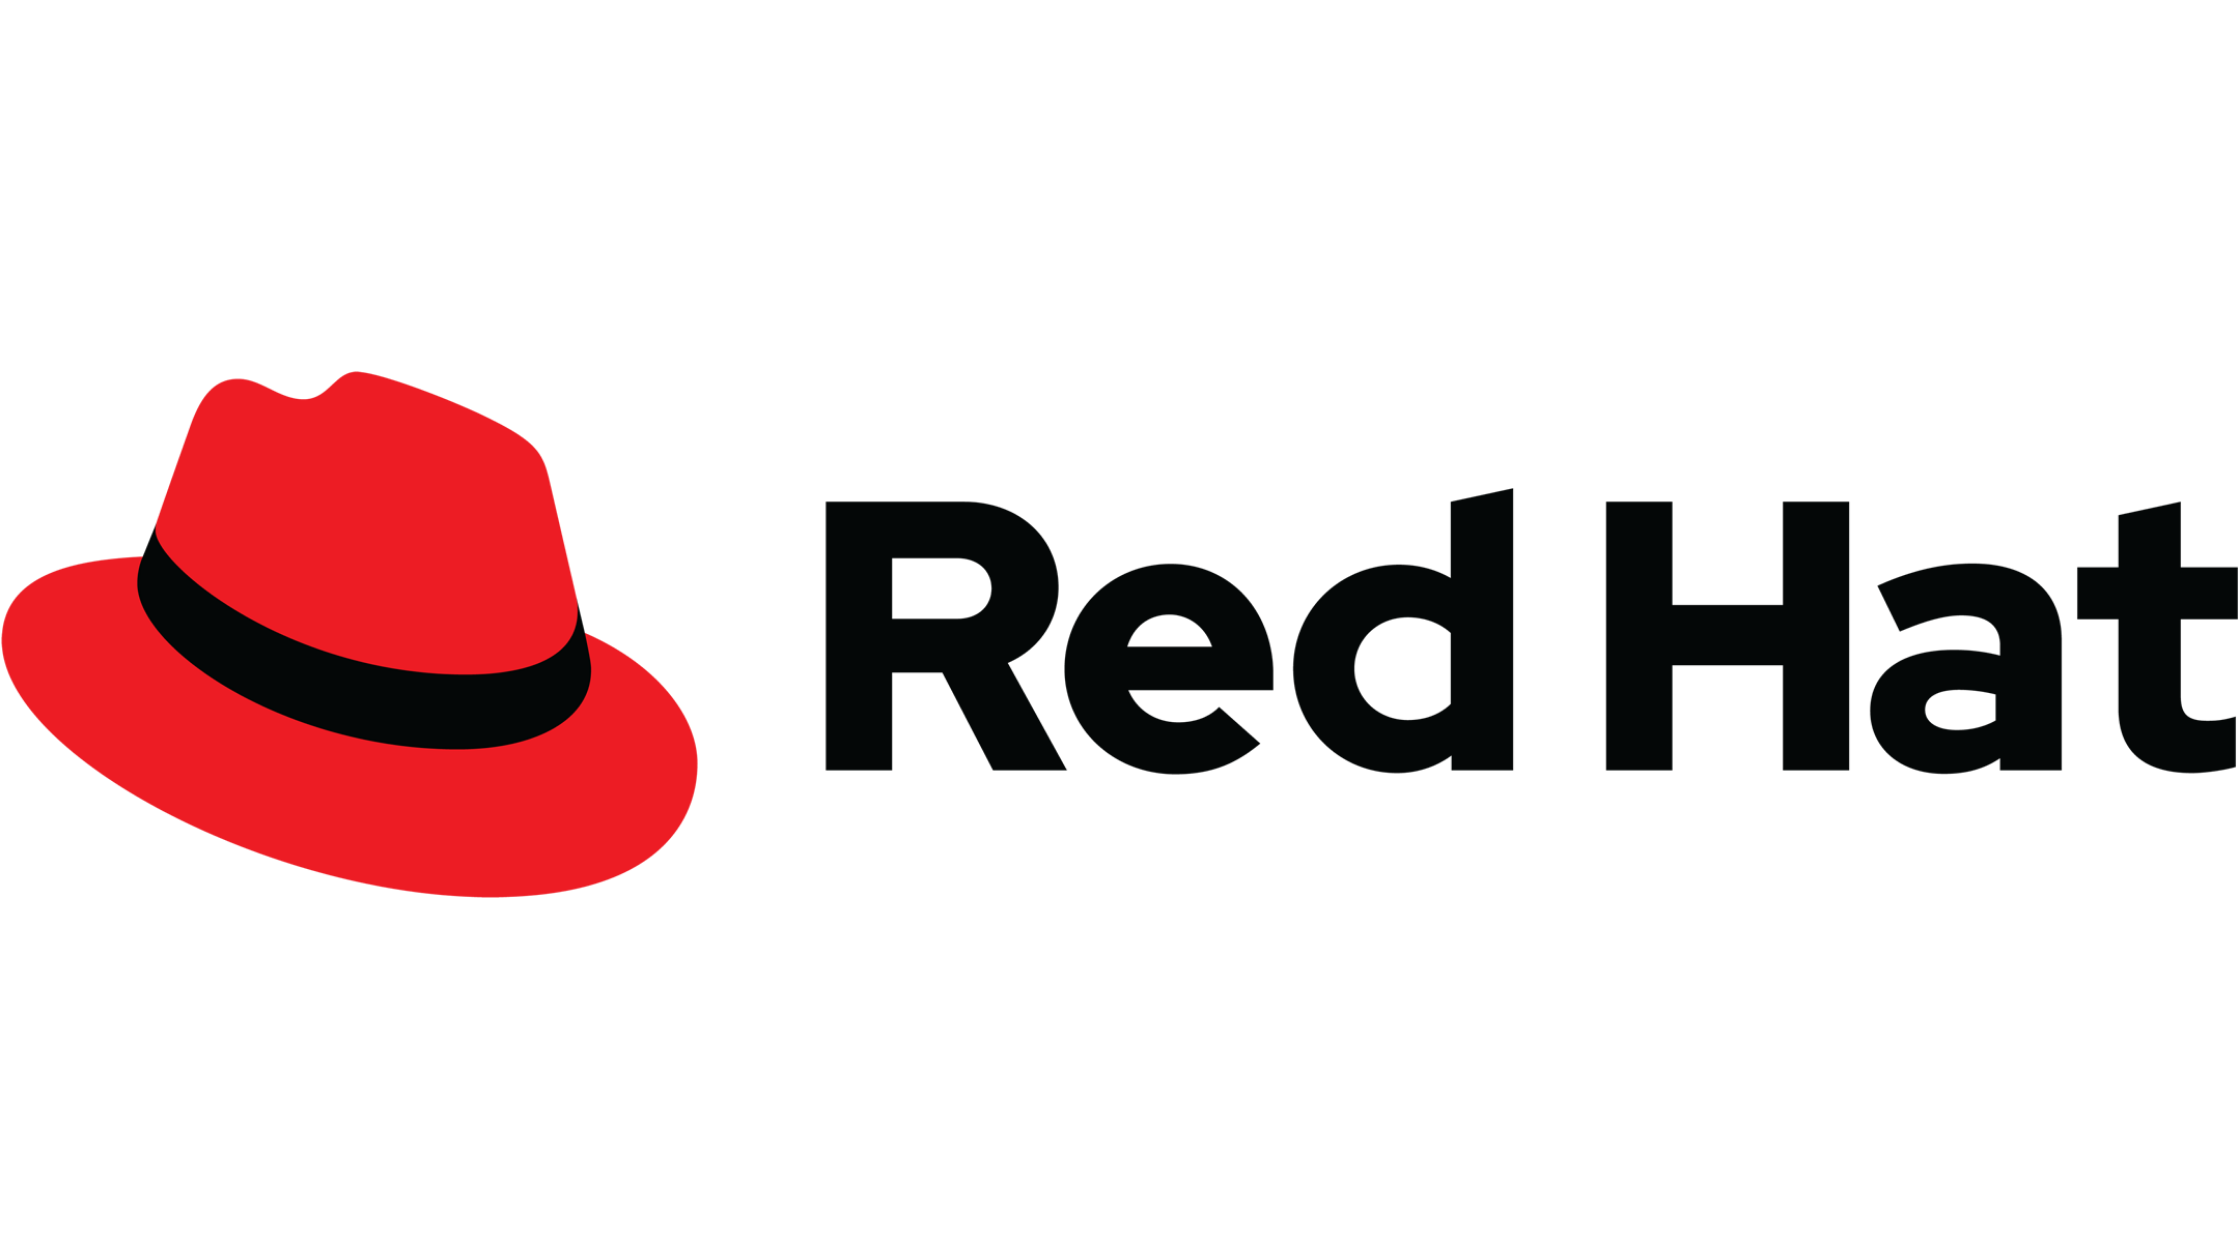 Red hat 2. Red hat. Red hat эмблема. Red hat Enterprise логотип. Логотип красная шляпа.